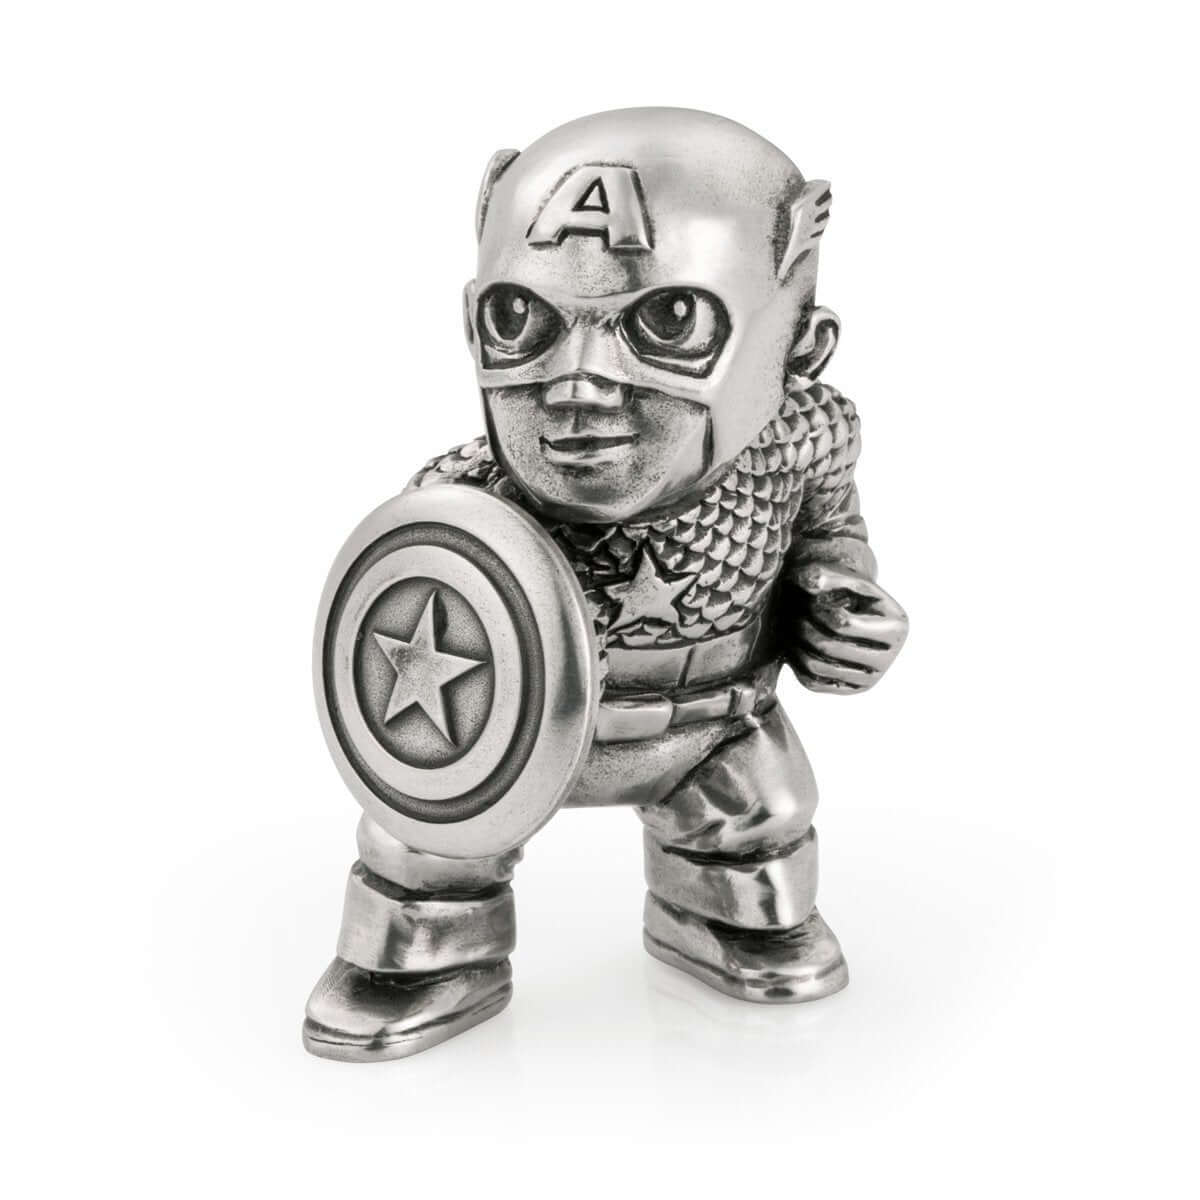 Captain America Miniature Figurine - Marvel Collectible gift